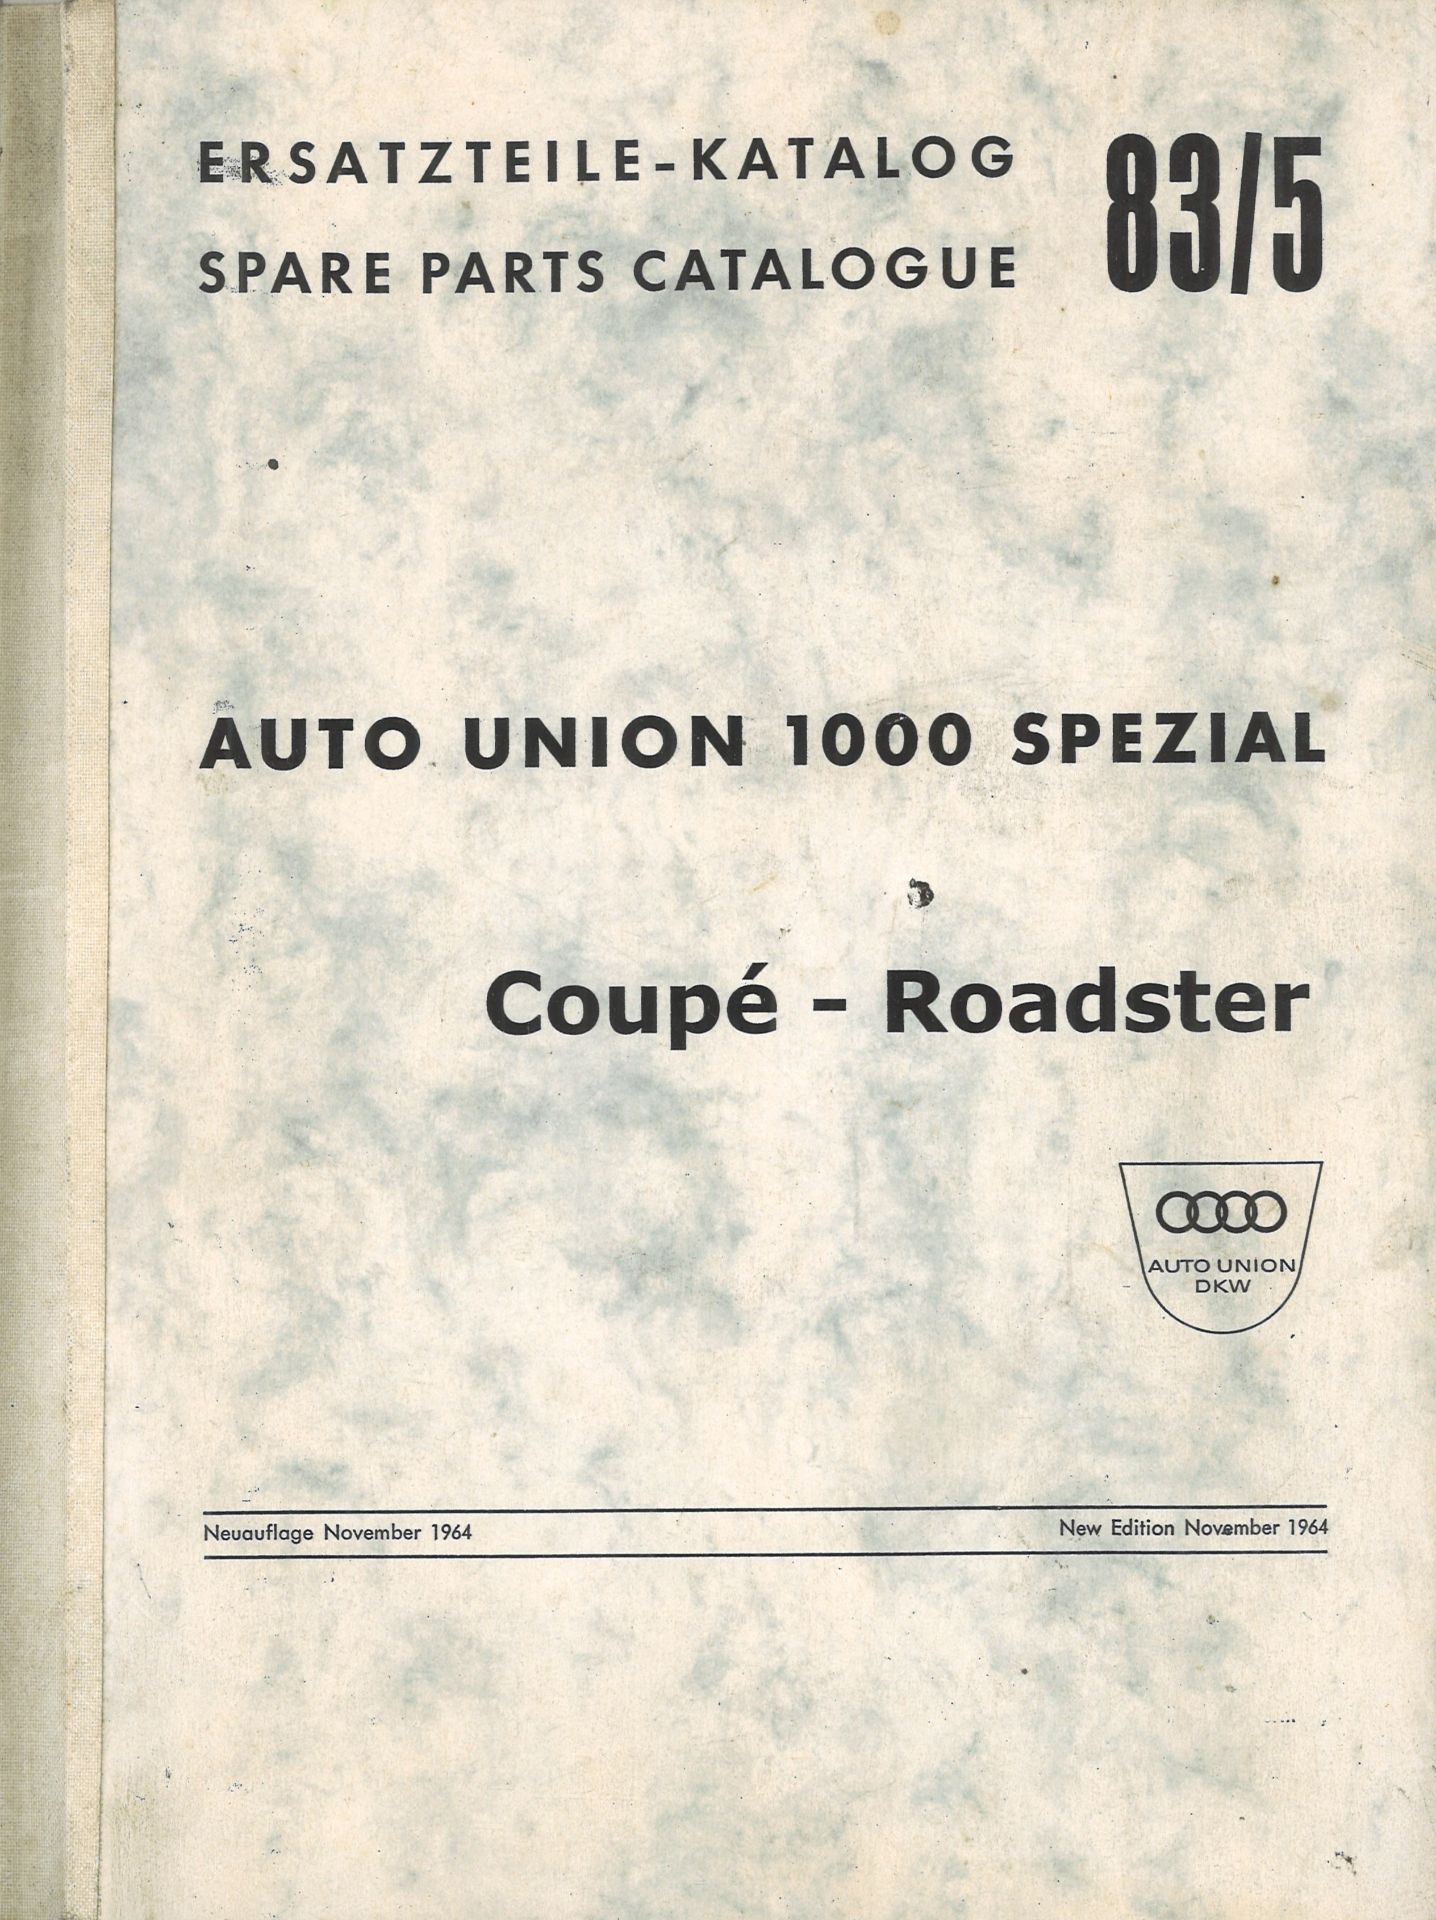 Aus Oldtimer Sammlung! Ersatzteile - Katalog 83/5. Auto Union 1000 Spezial "Coupe - Roadster"